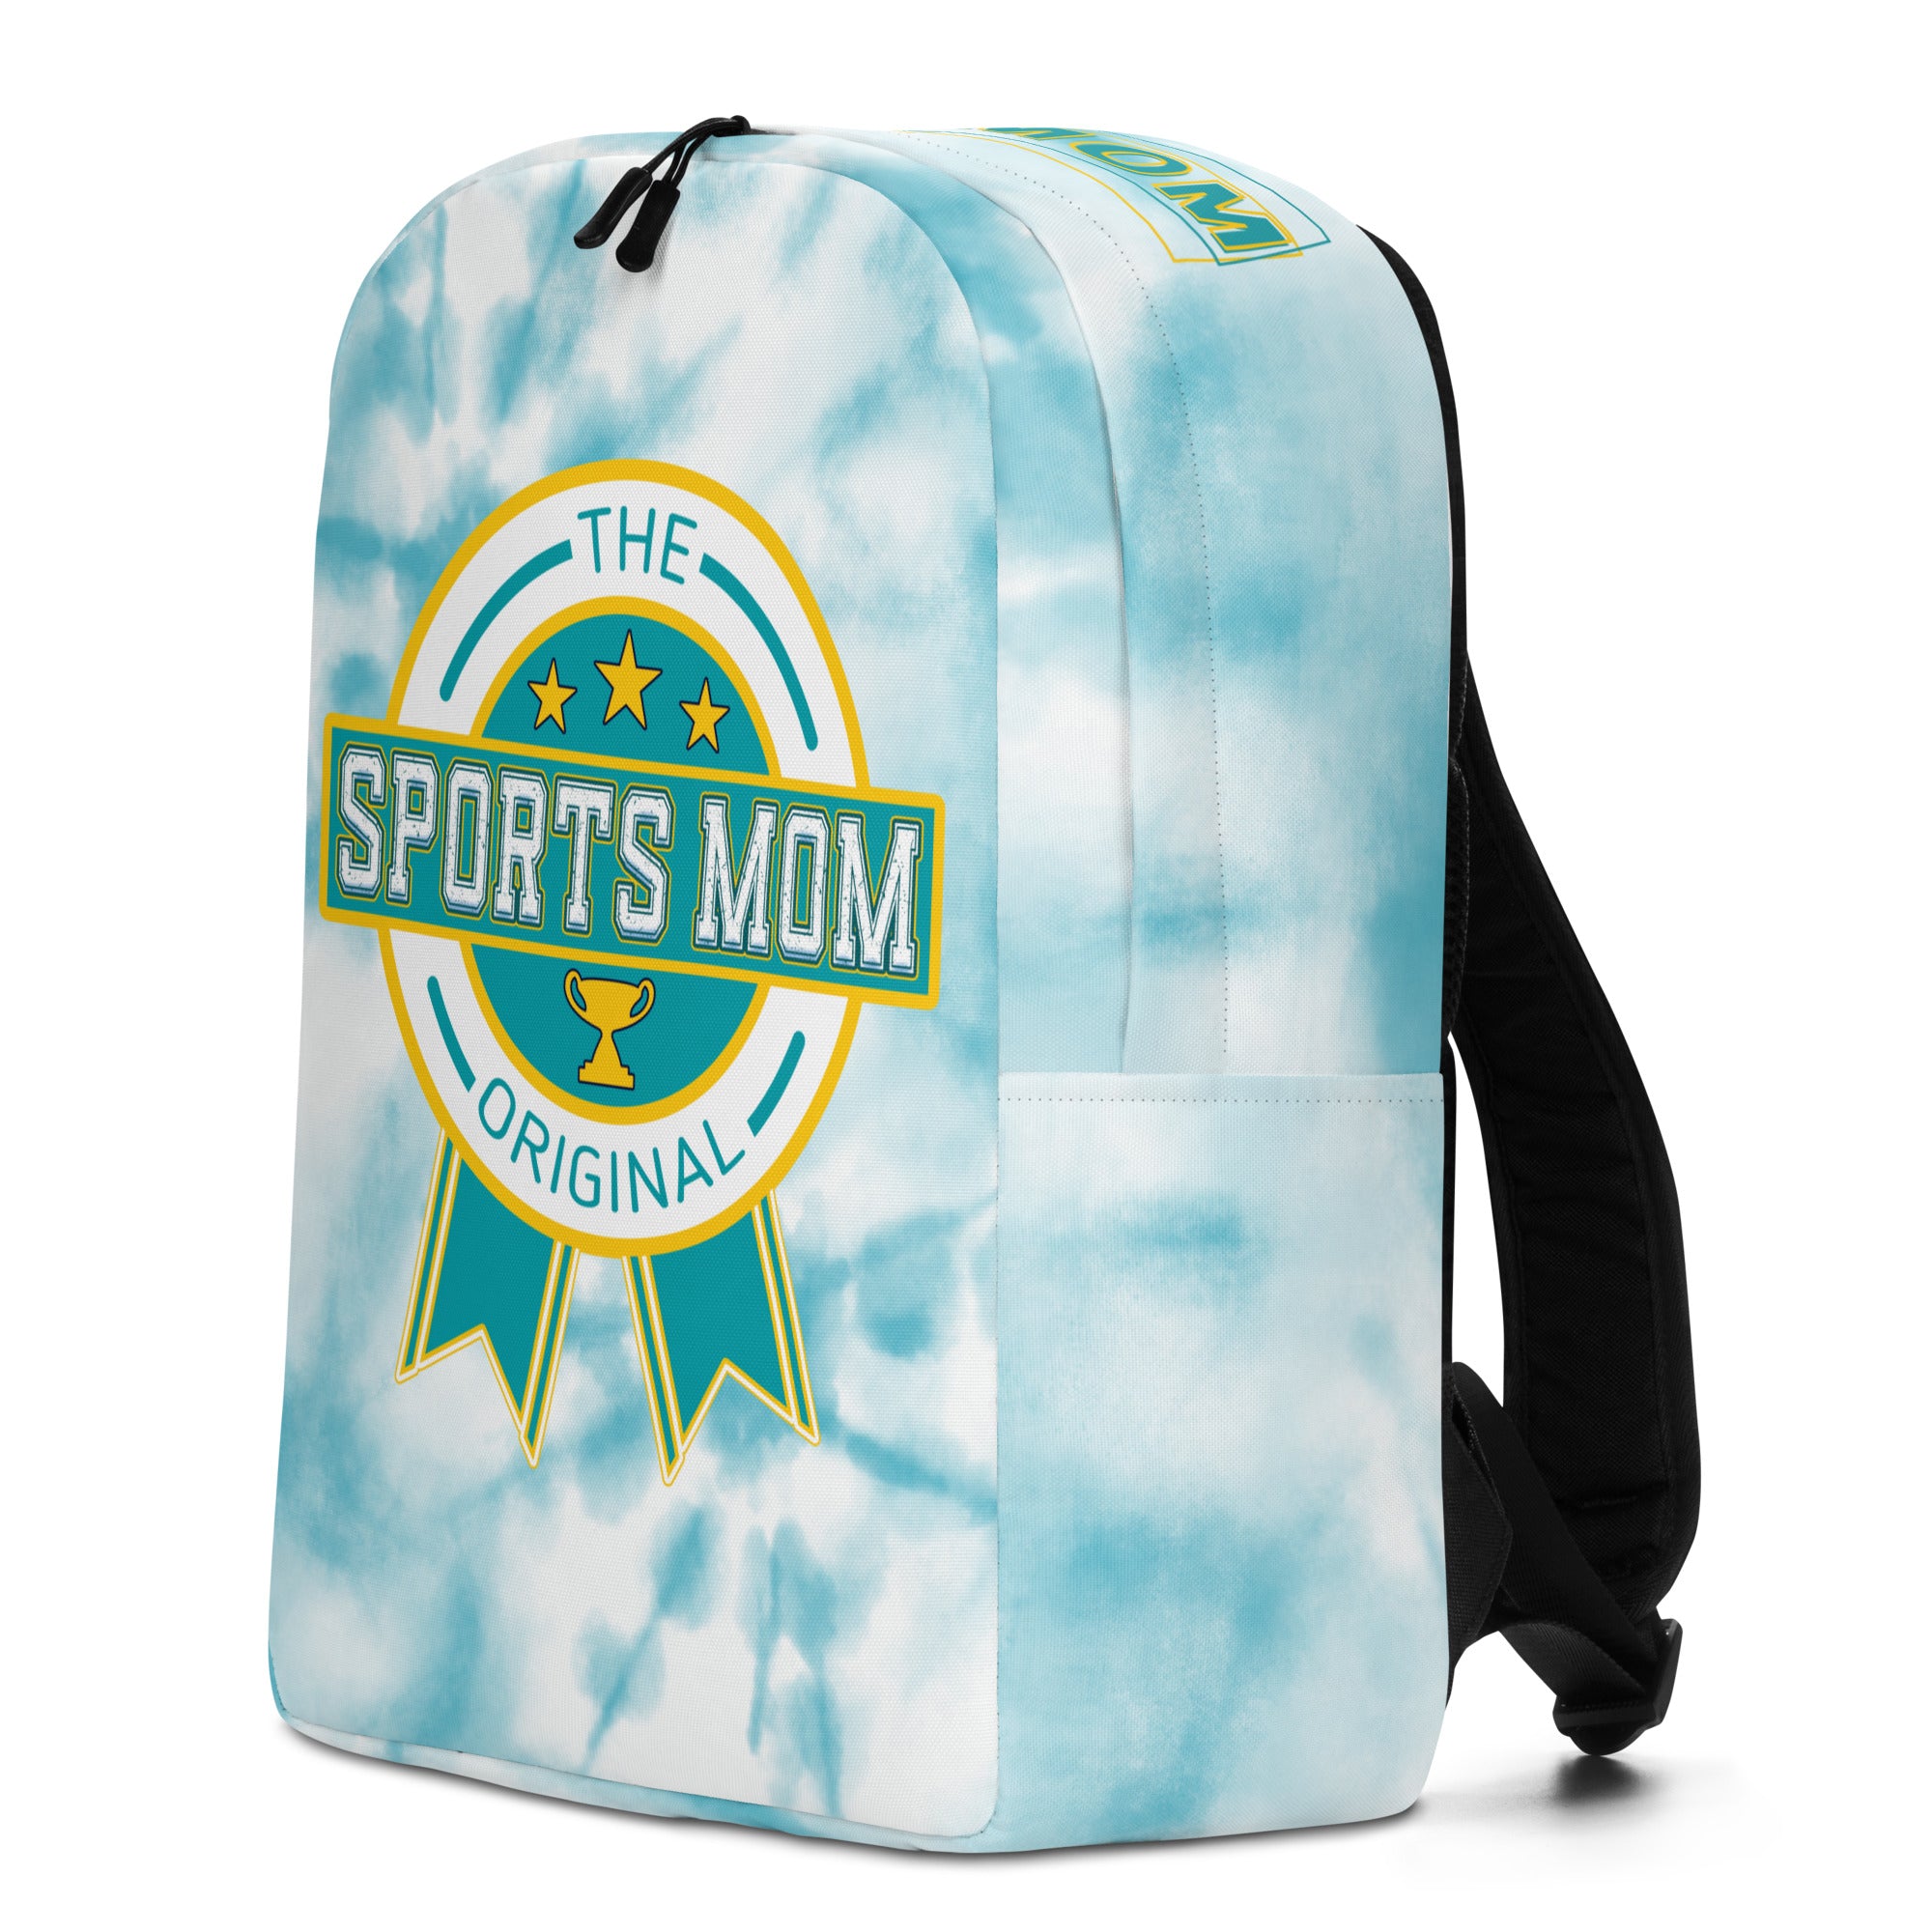 Sports Mom Minimalist Backpack - Blue Sky Tie-Dye